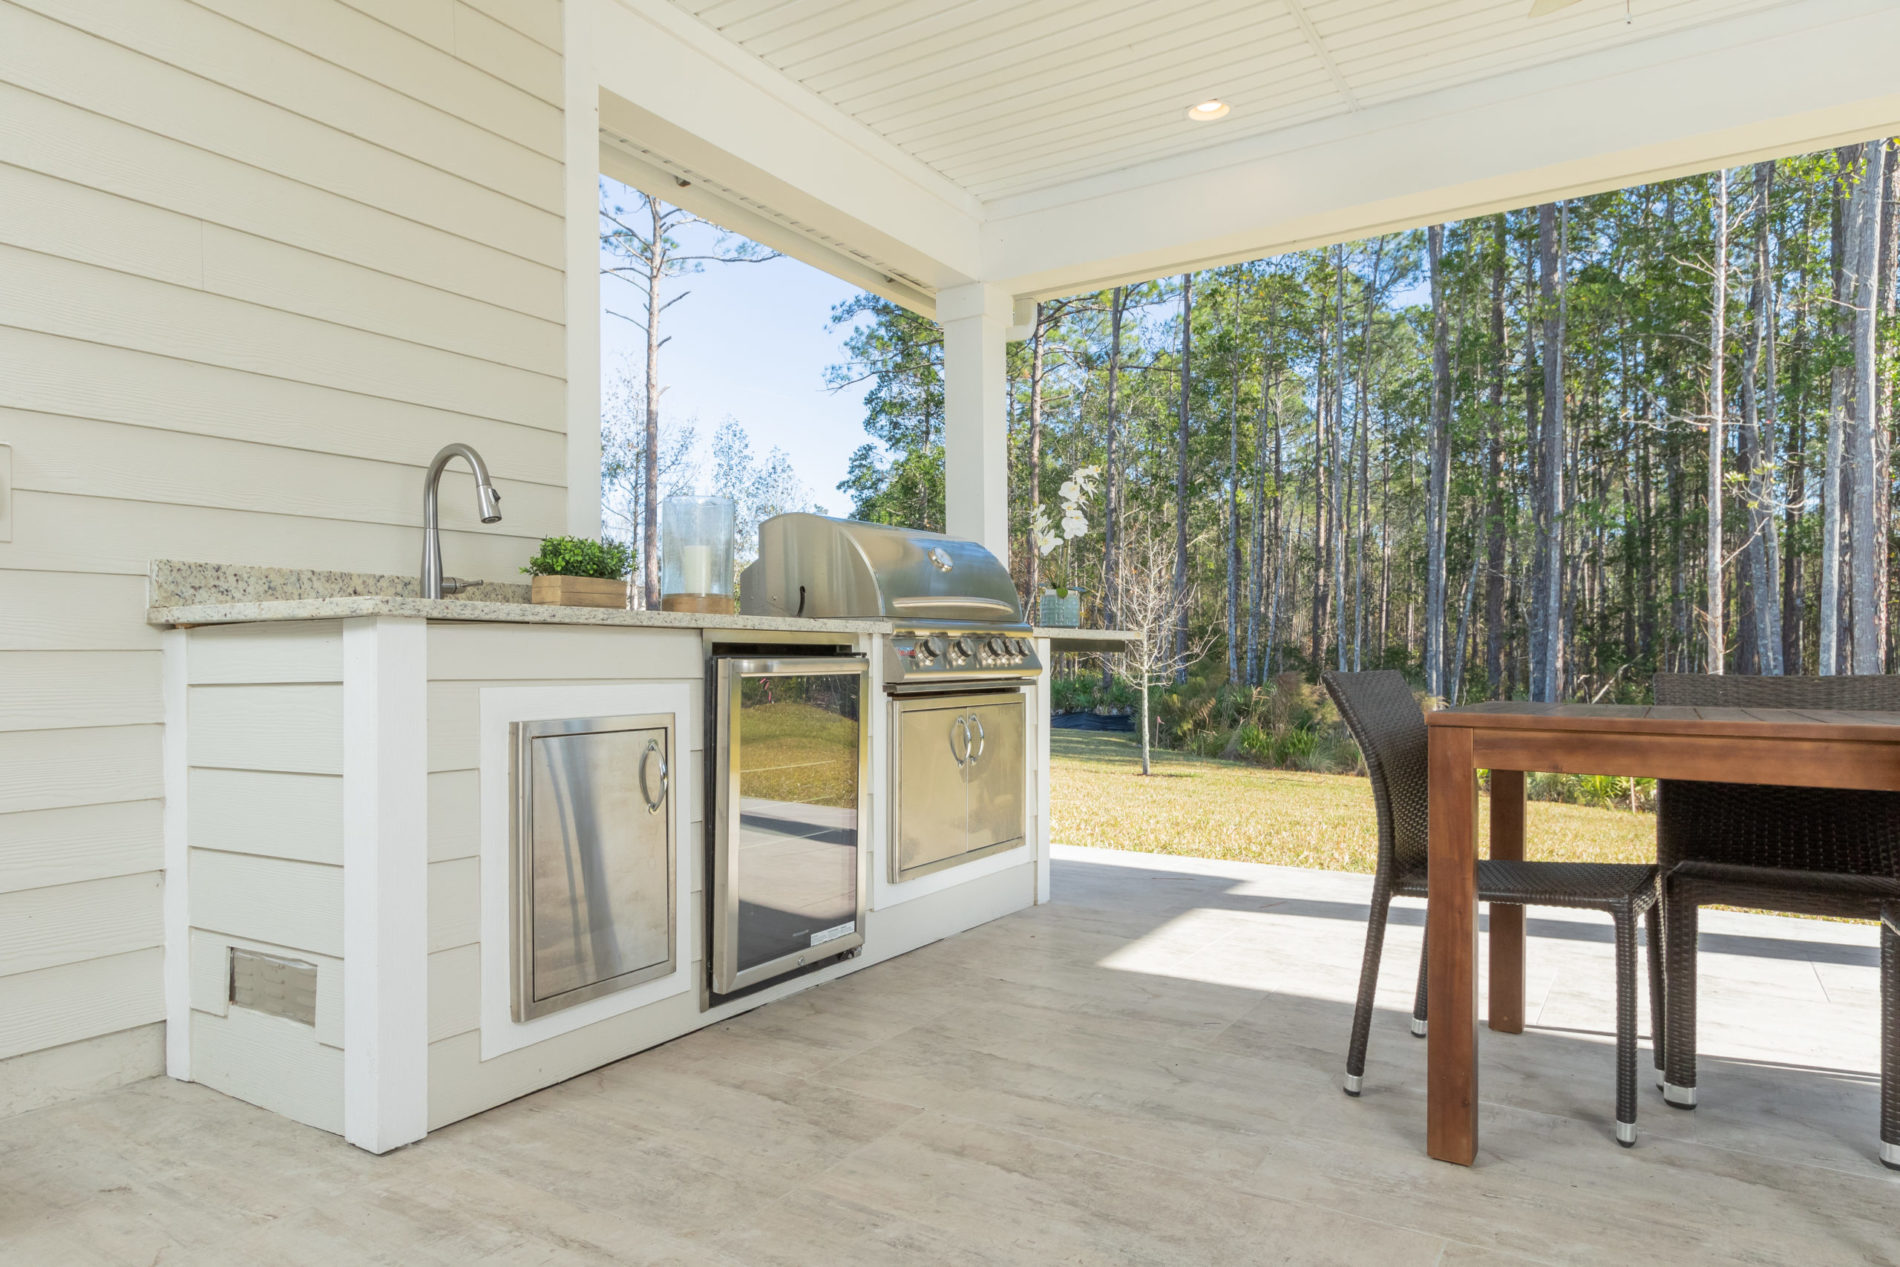 CSS - Outdoor Summer Kitchens in Jacksonville FL